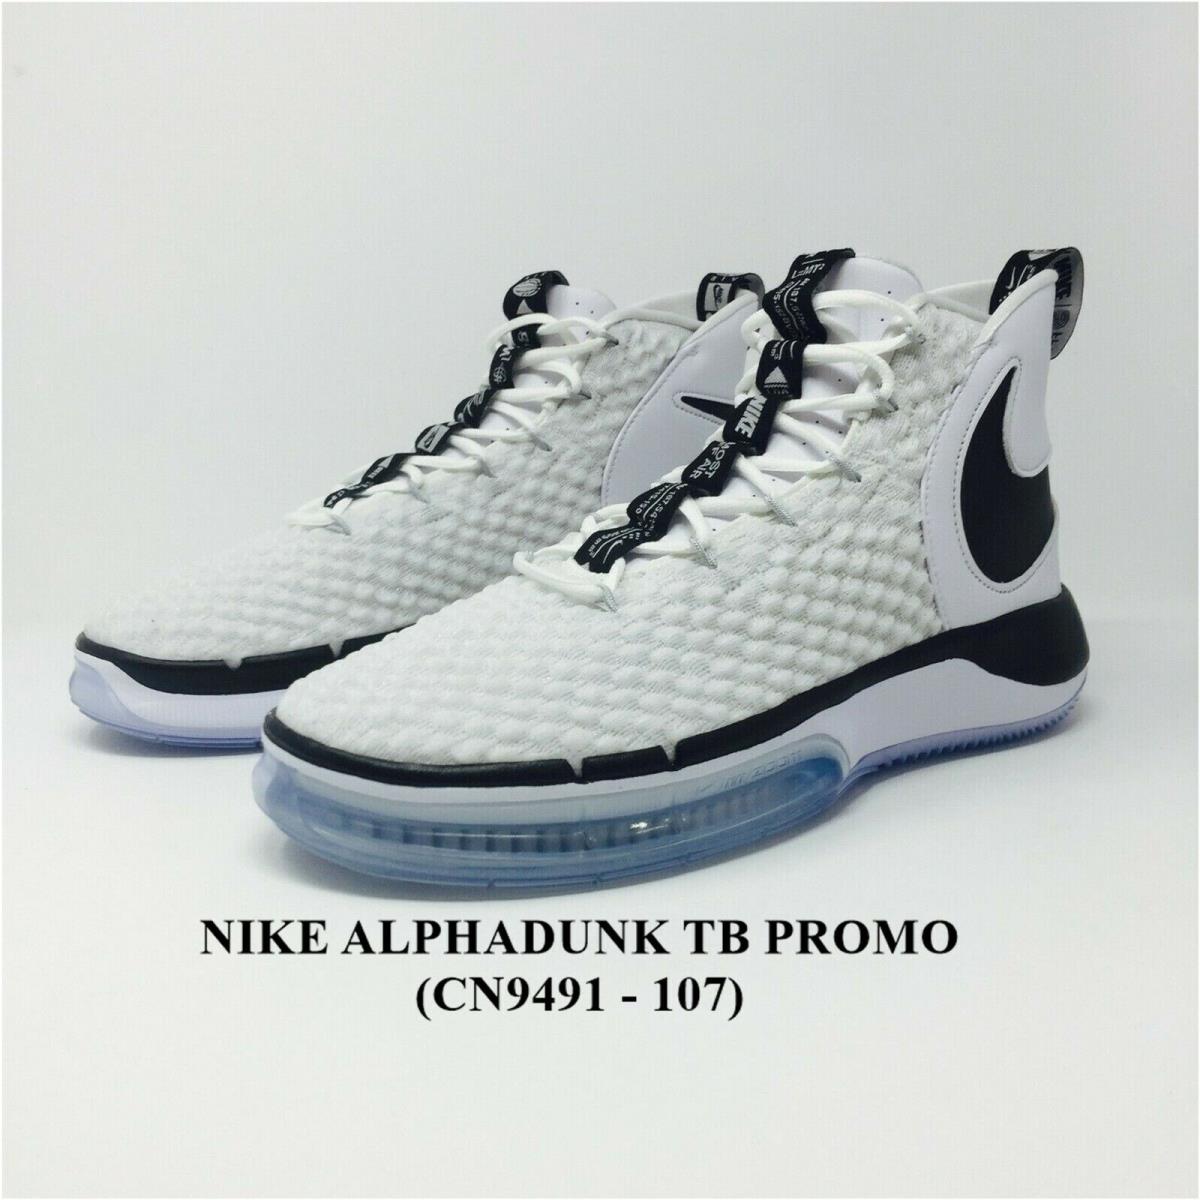 Nike Alphadunk TB Promo CN9491 - 107 Men`s Basketball Shoes.nwb NO Lid - WHITE/BLACK-BLACK , MULTI-COLOR / MULTI-COLOR Manufacturer